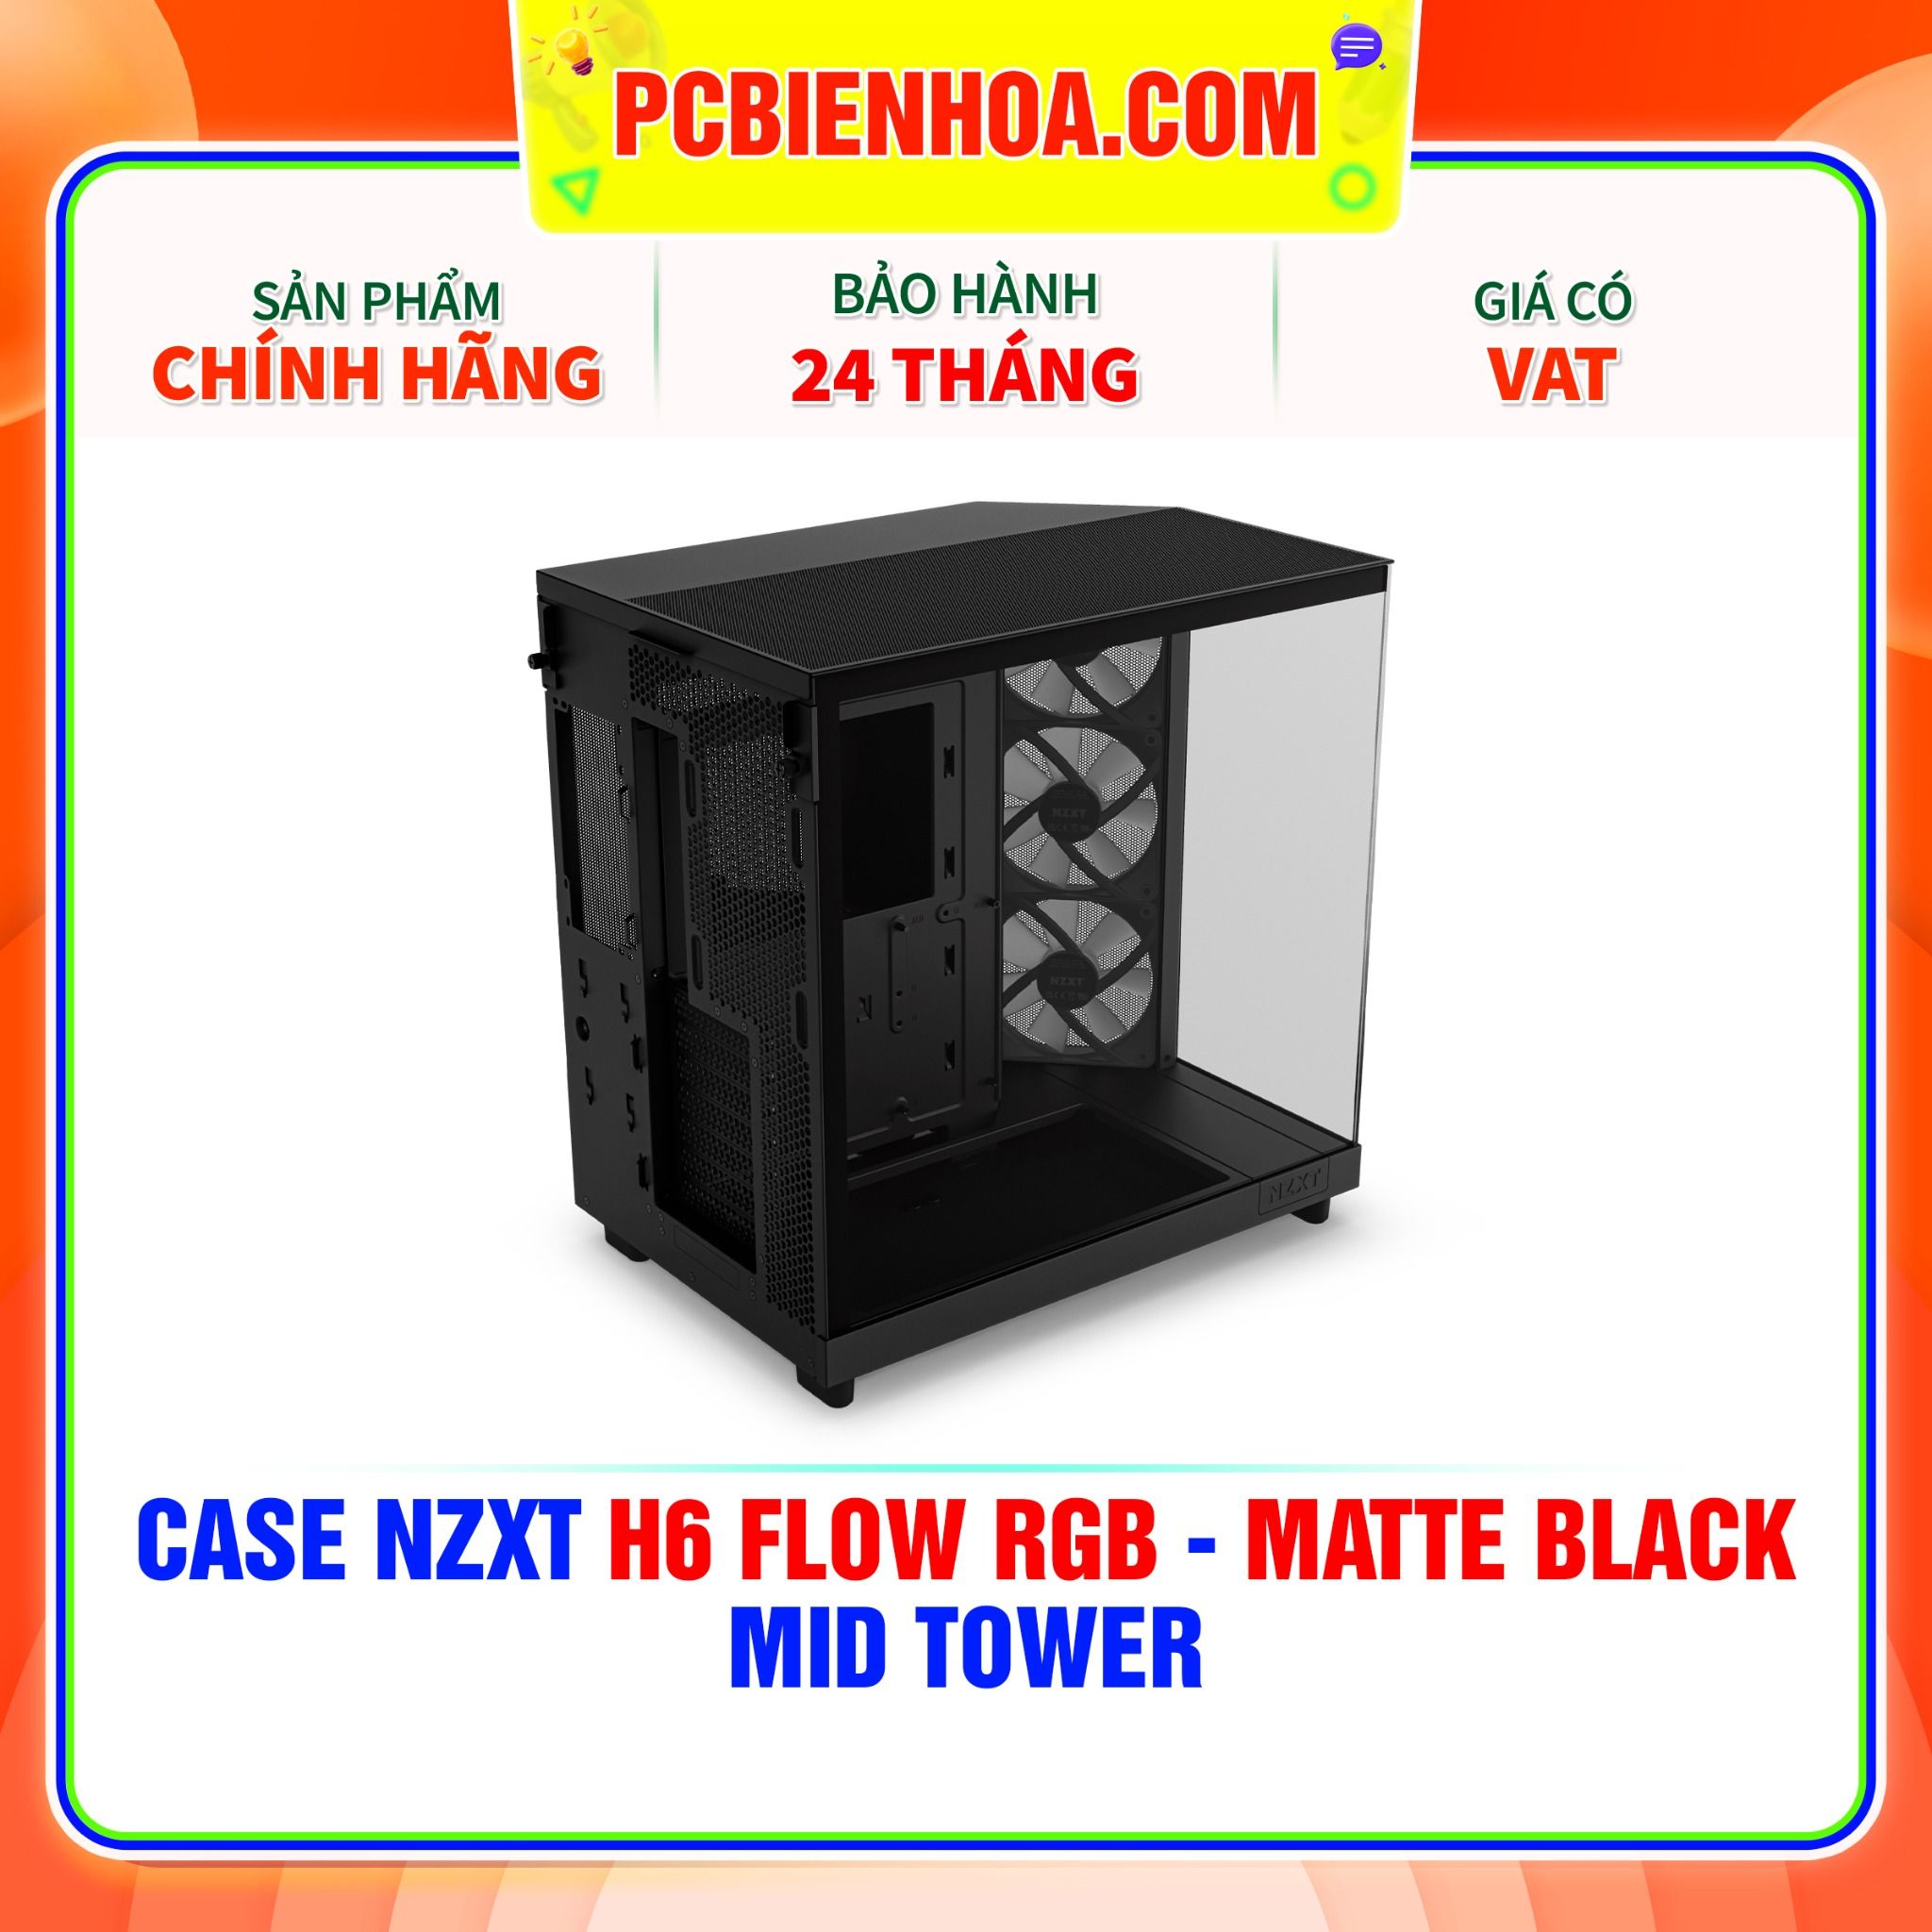  CASE NZXT H6 FLOW RGB - MATTE BLACK ( MID TOWER ) 